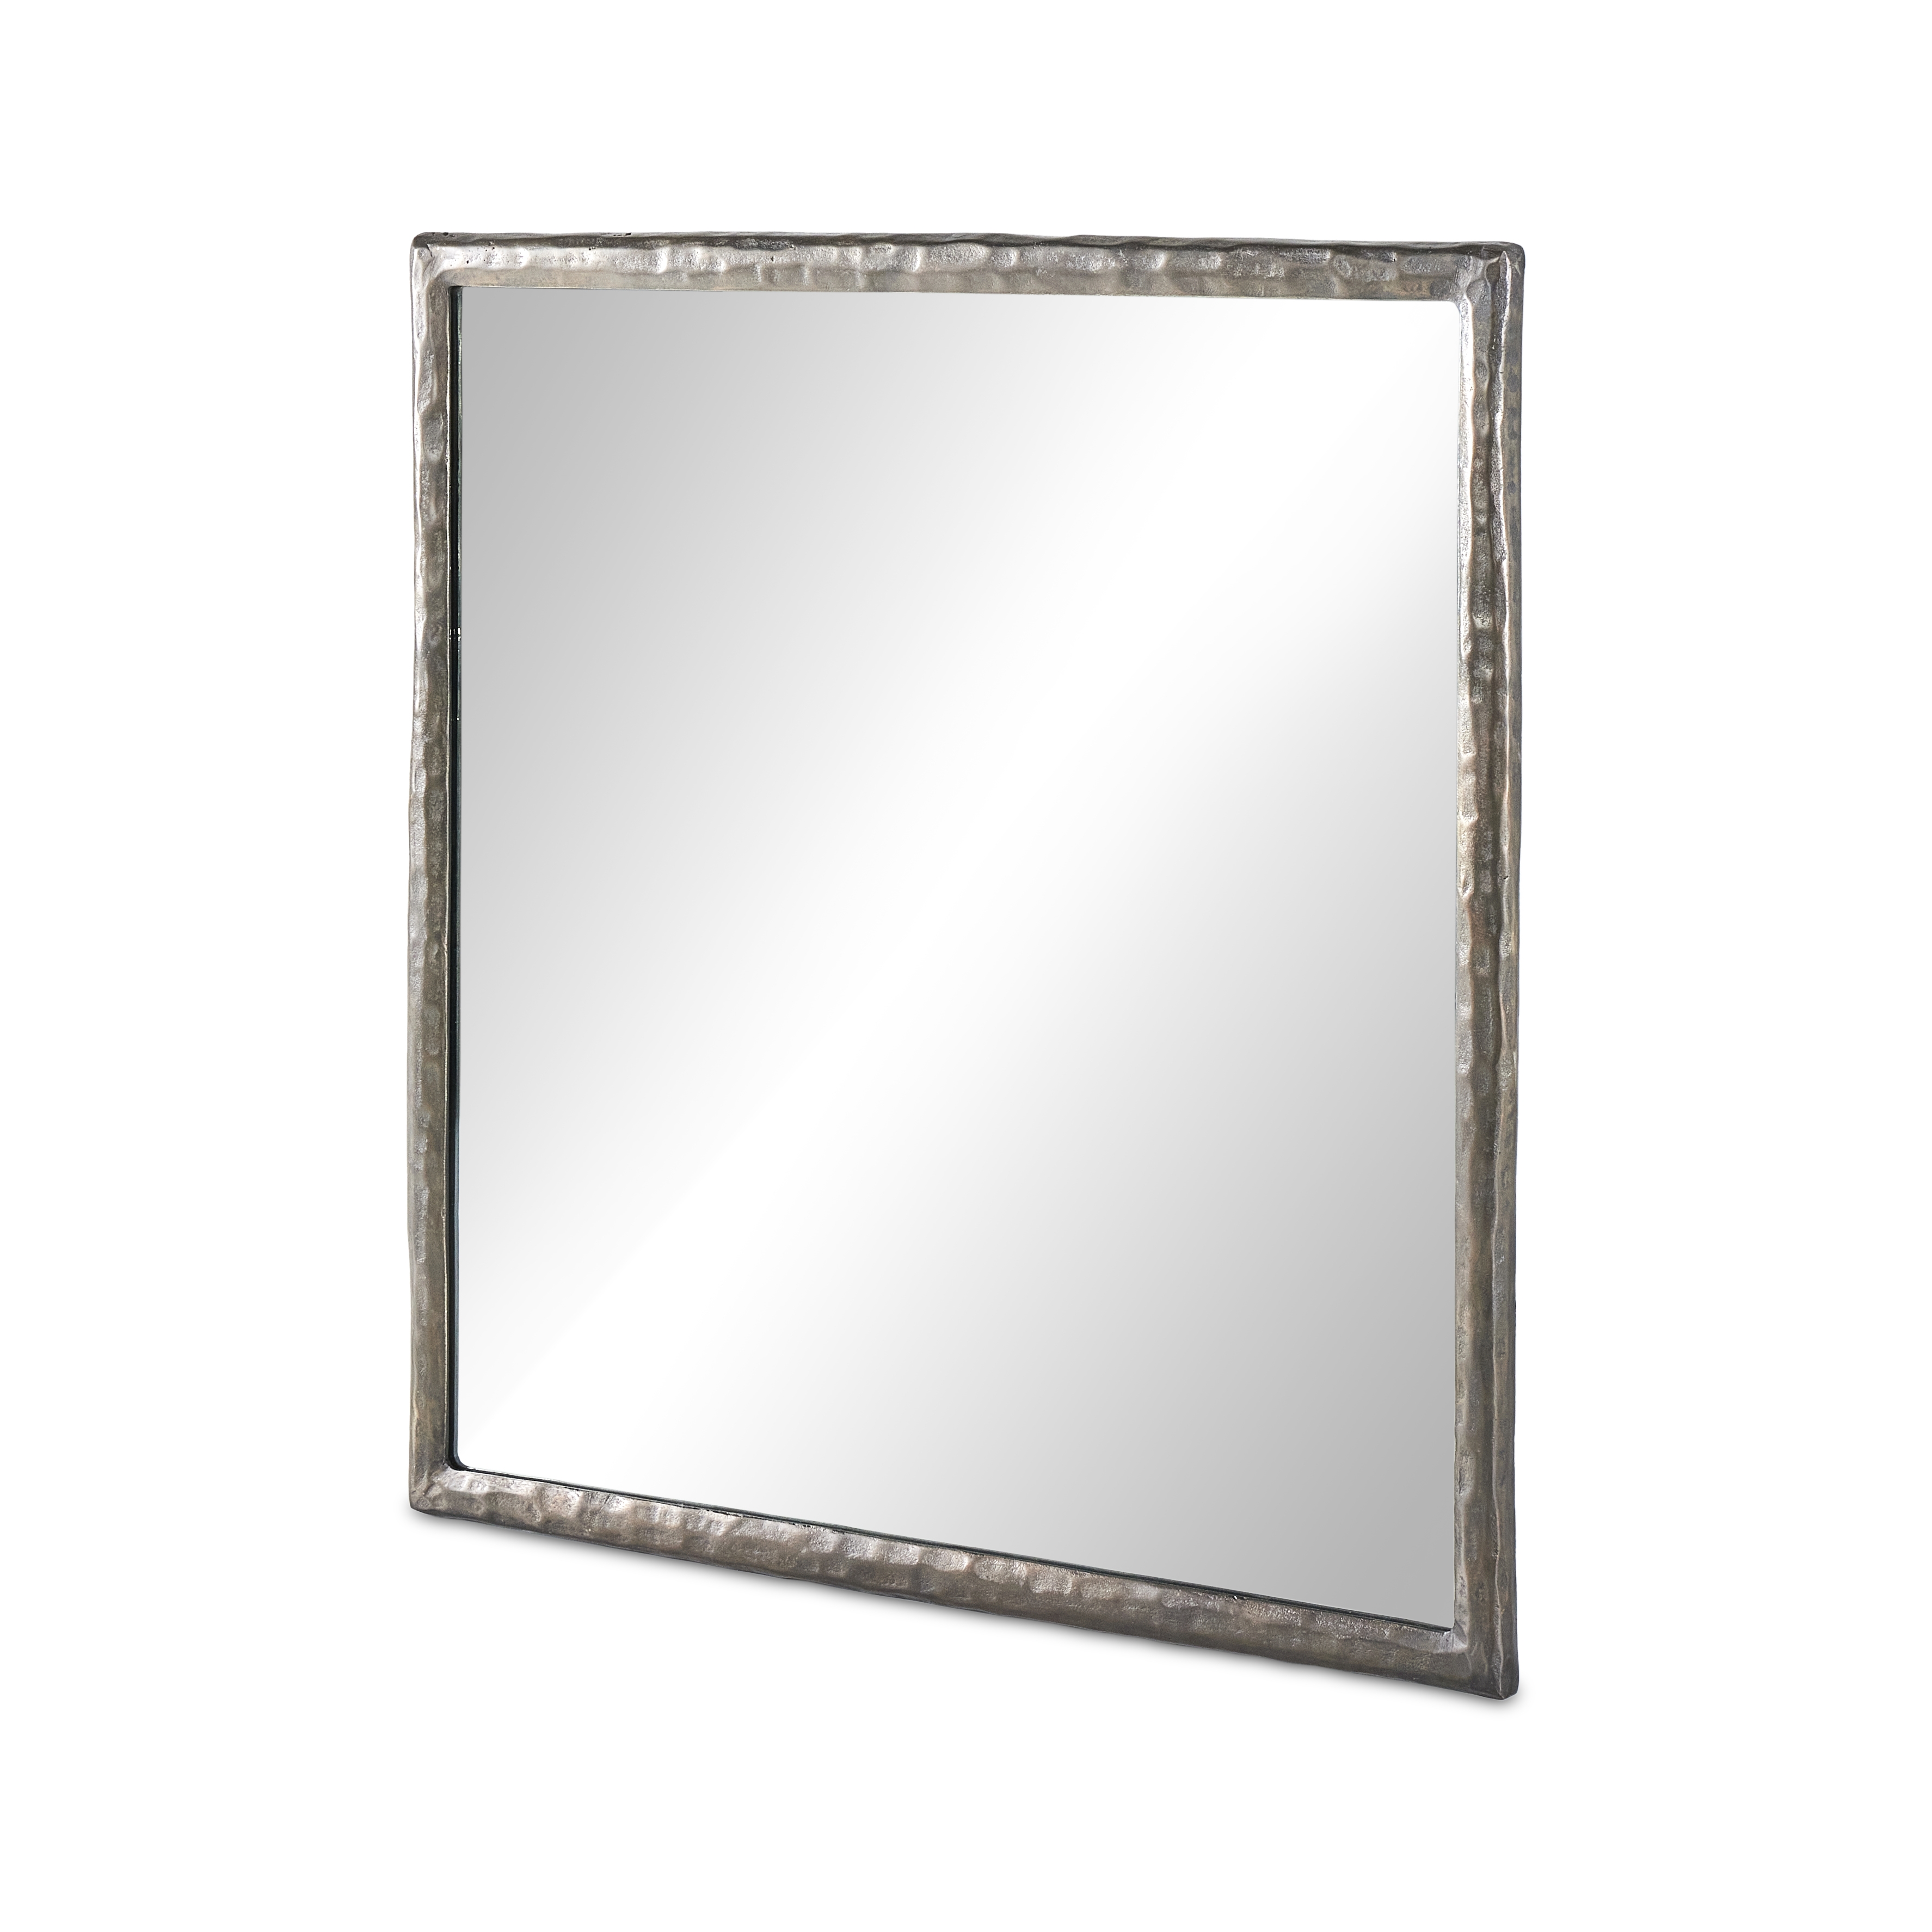 Langford Wall Mirror-Smoked Nickel - Image 2